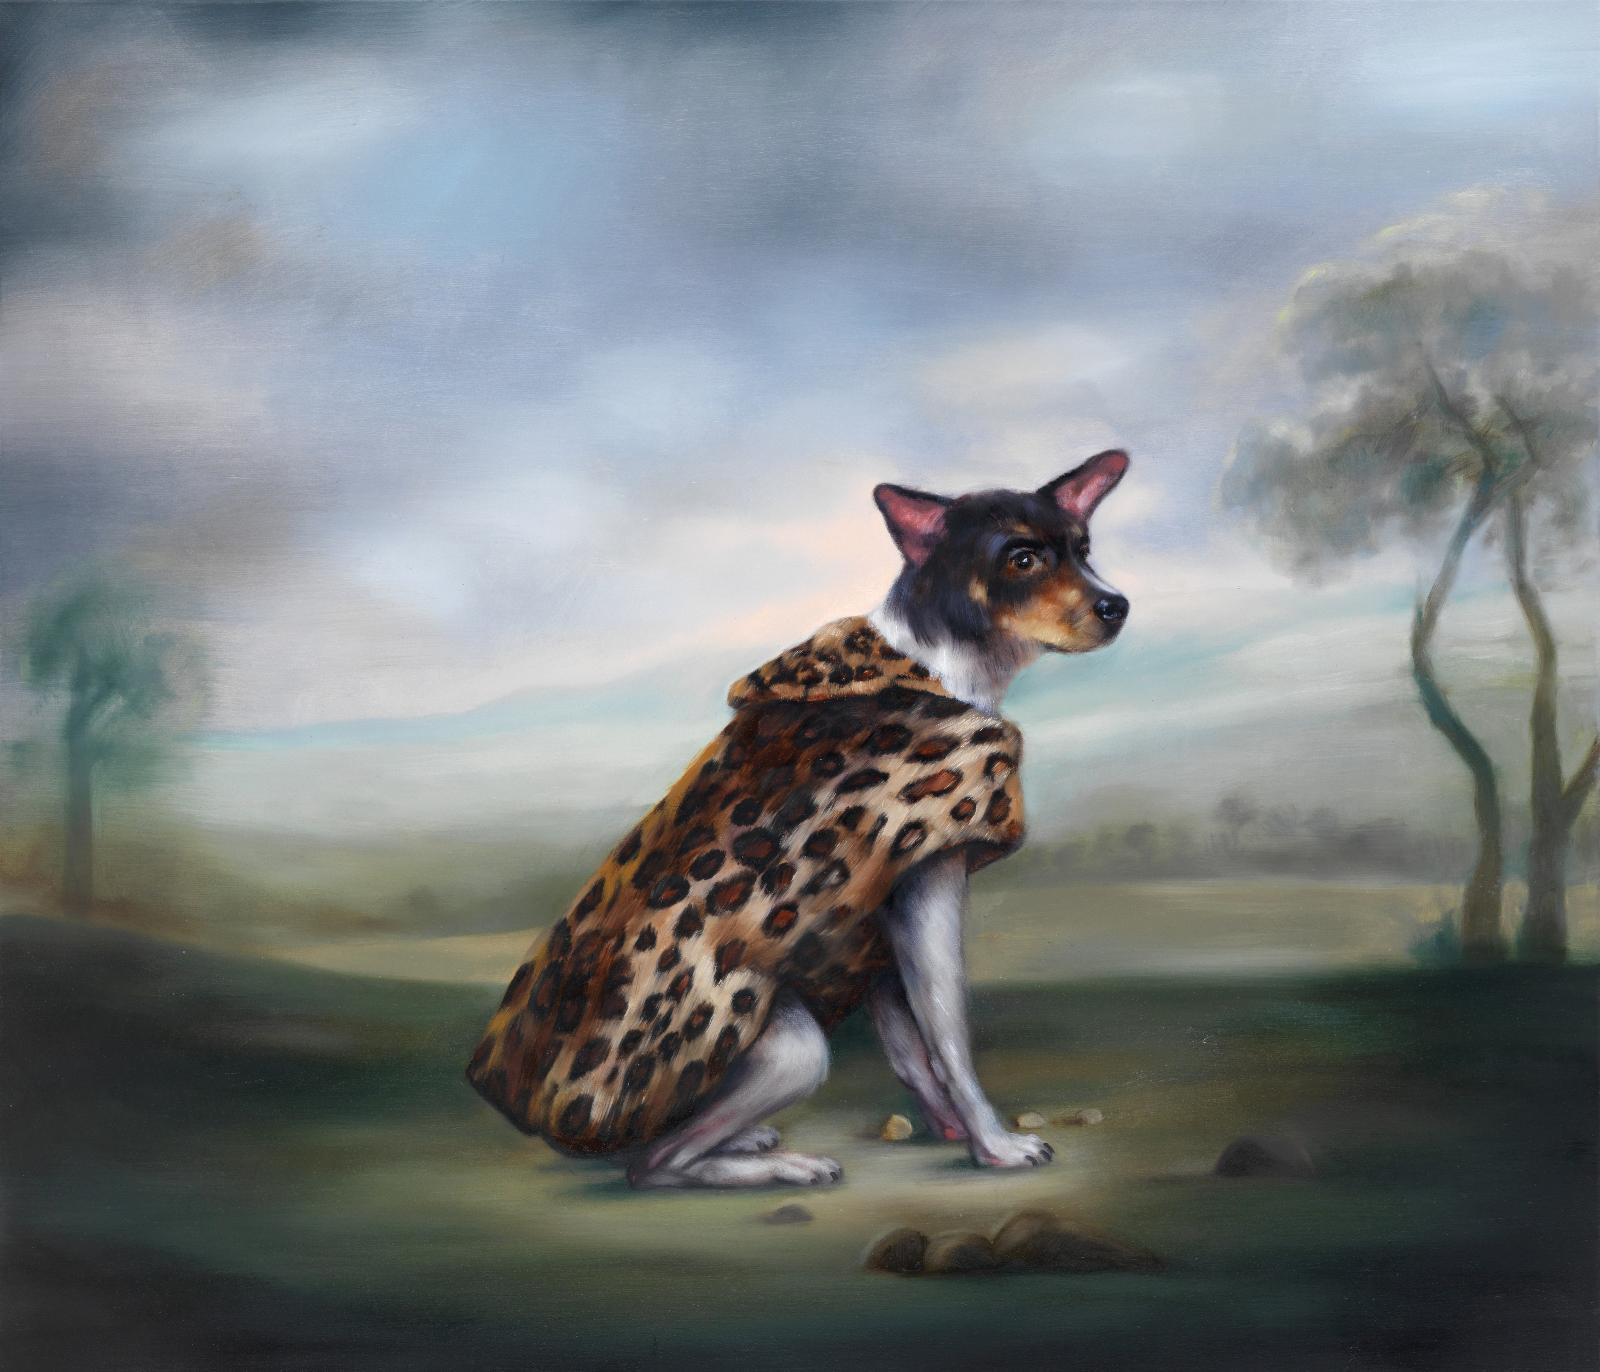 Simone Haack, Leopard, 2019, Öl auf Baumwolle, 120 cm x 140 cm, verkauft, Galerie Cyprian Brenner